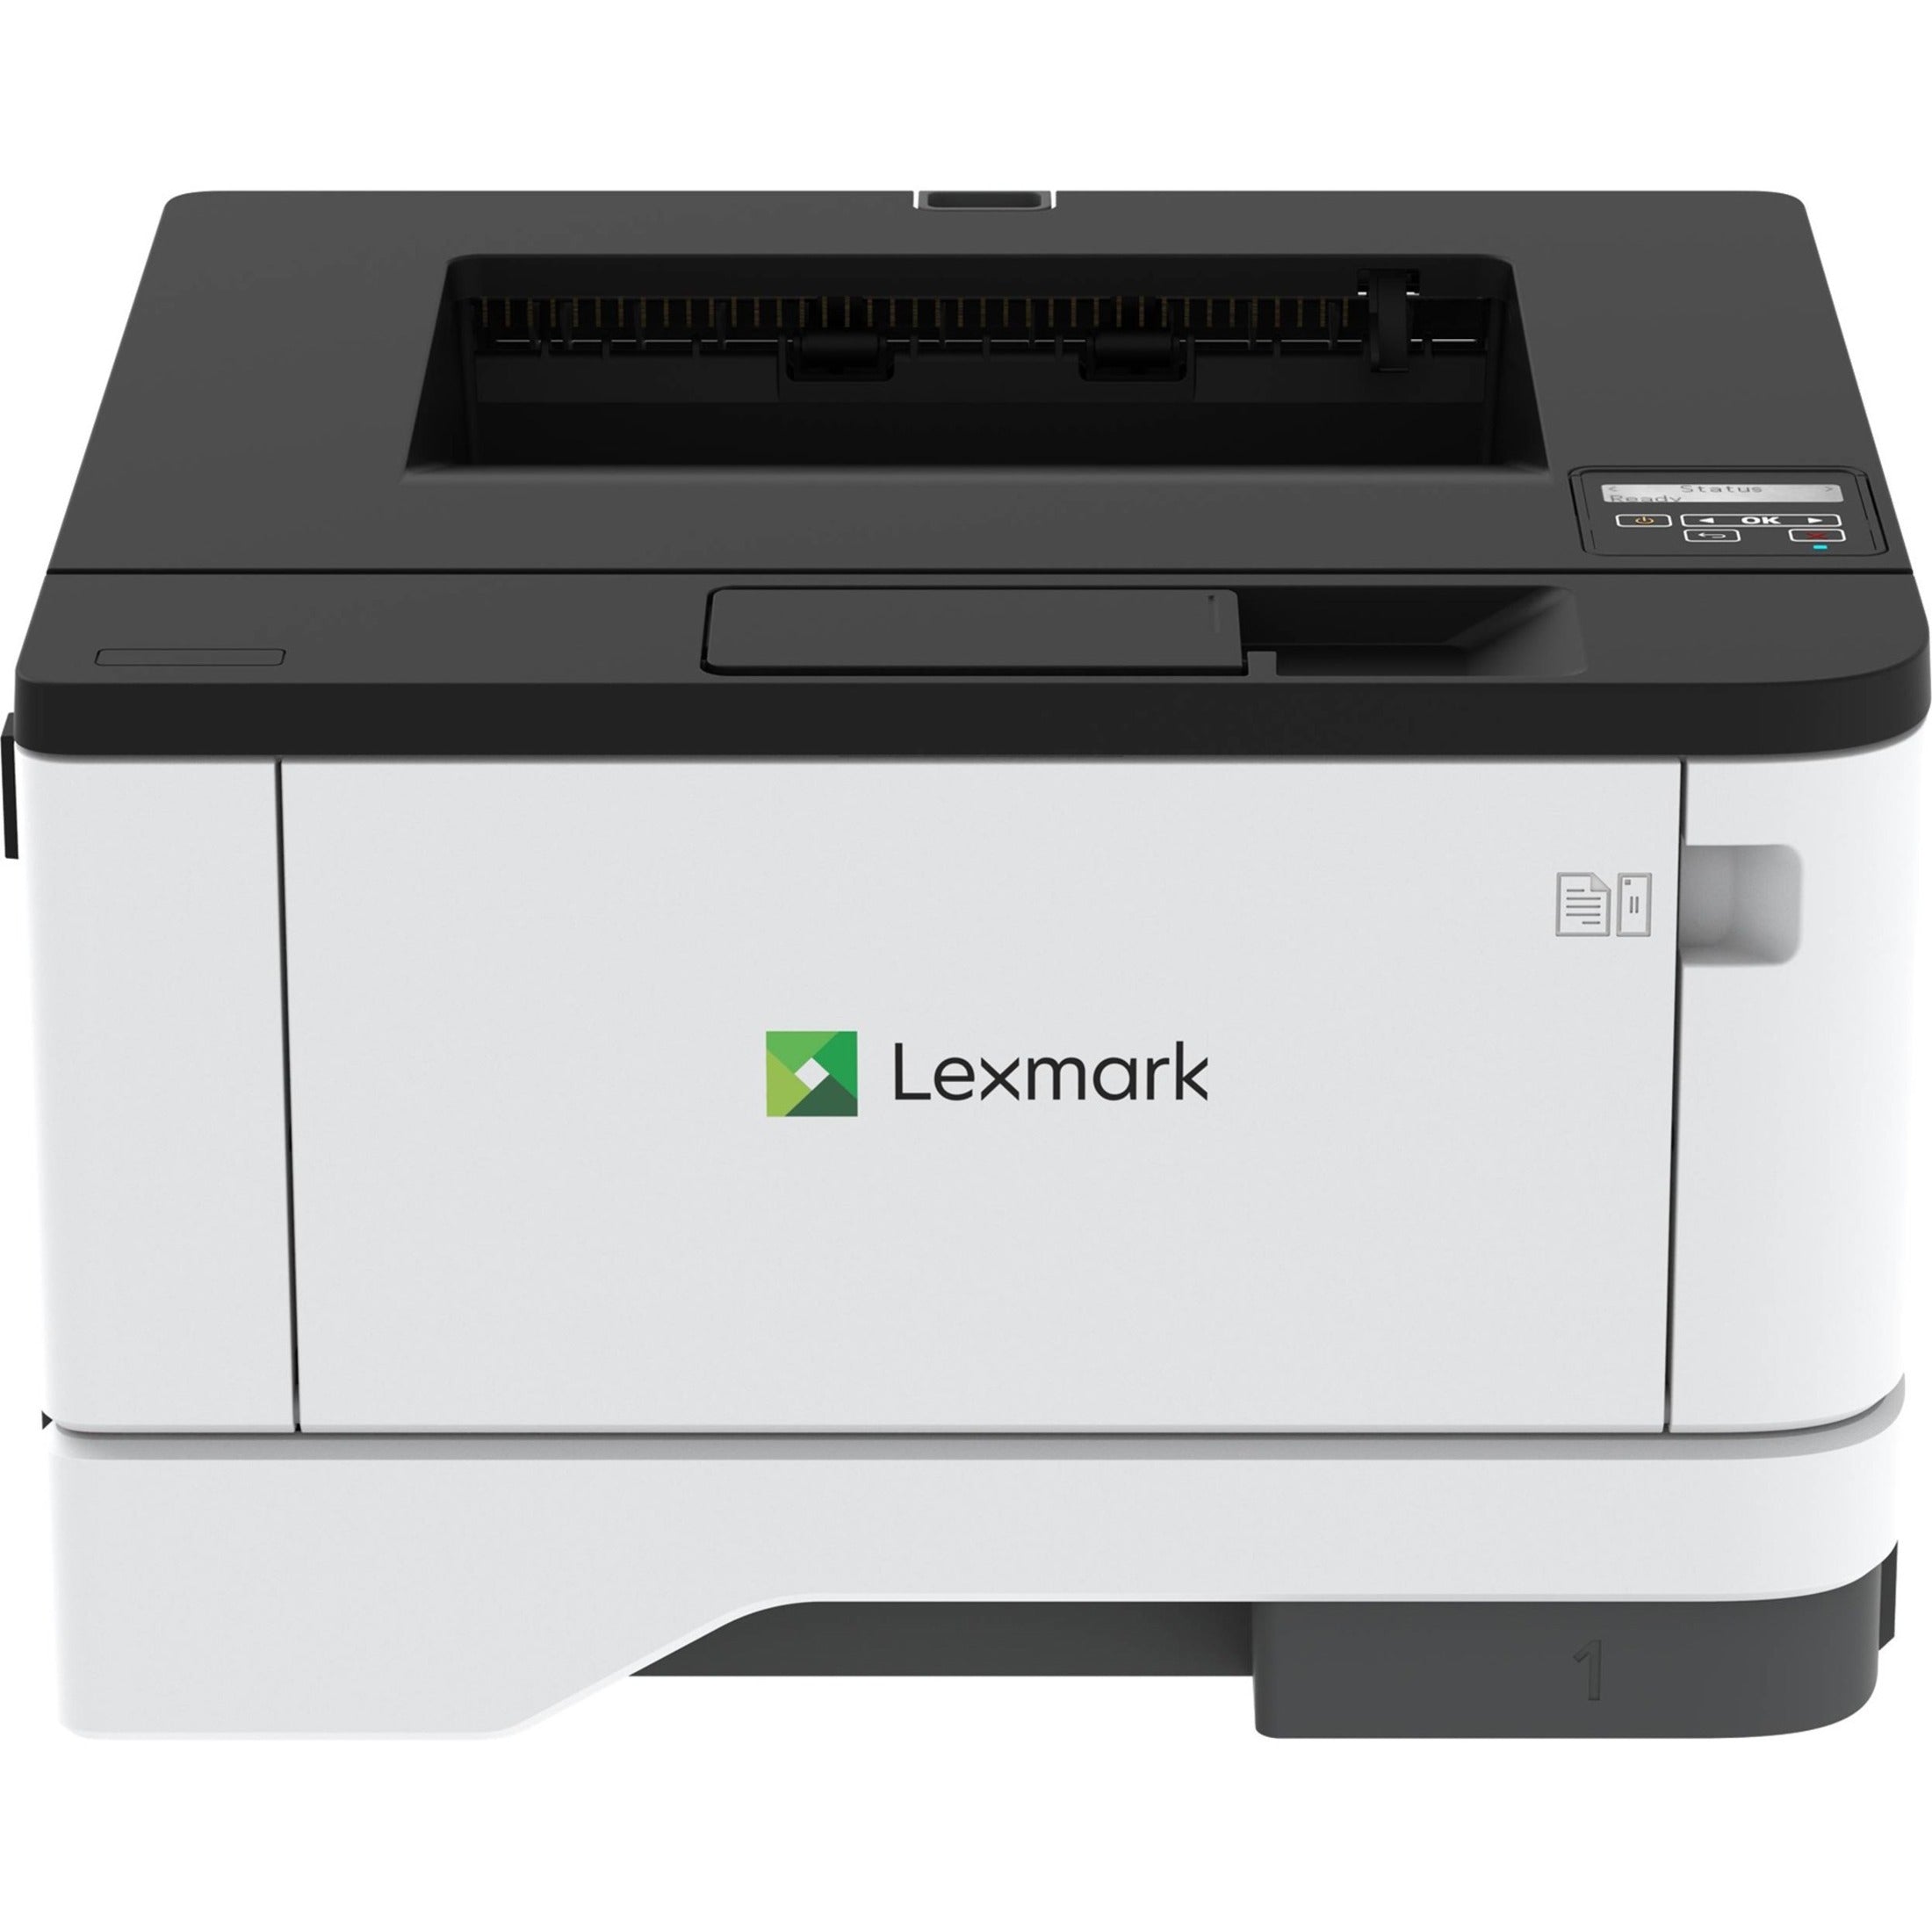 Lexmark 29ST001 MS431DN Imprimante laser monochrome impression recto verso automatique 42 ppm 600 x 600 ppp